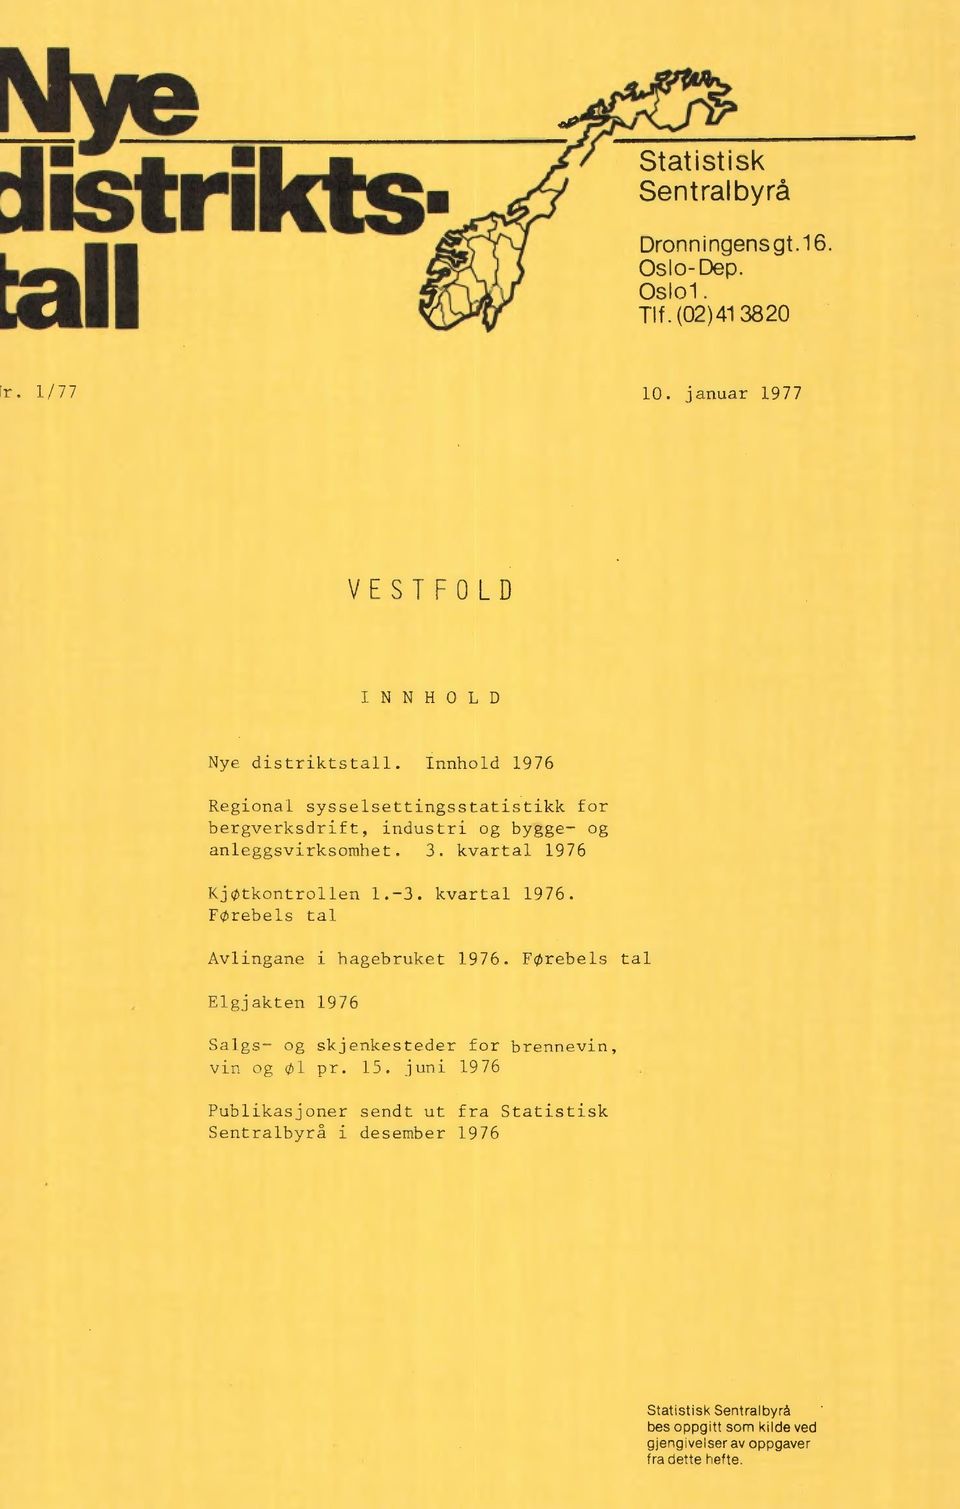 kvartal 1976 Kjøtkontrollen 1.-3. kvartal 1976. Førebels tal Avlingane i hagebruket 1976.